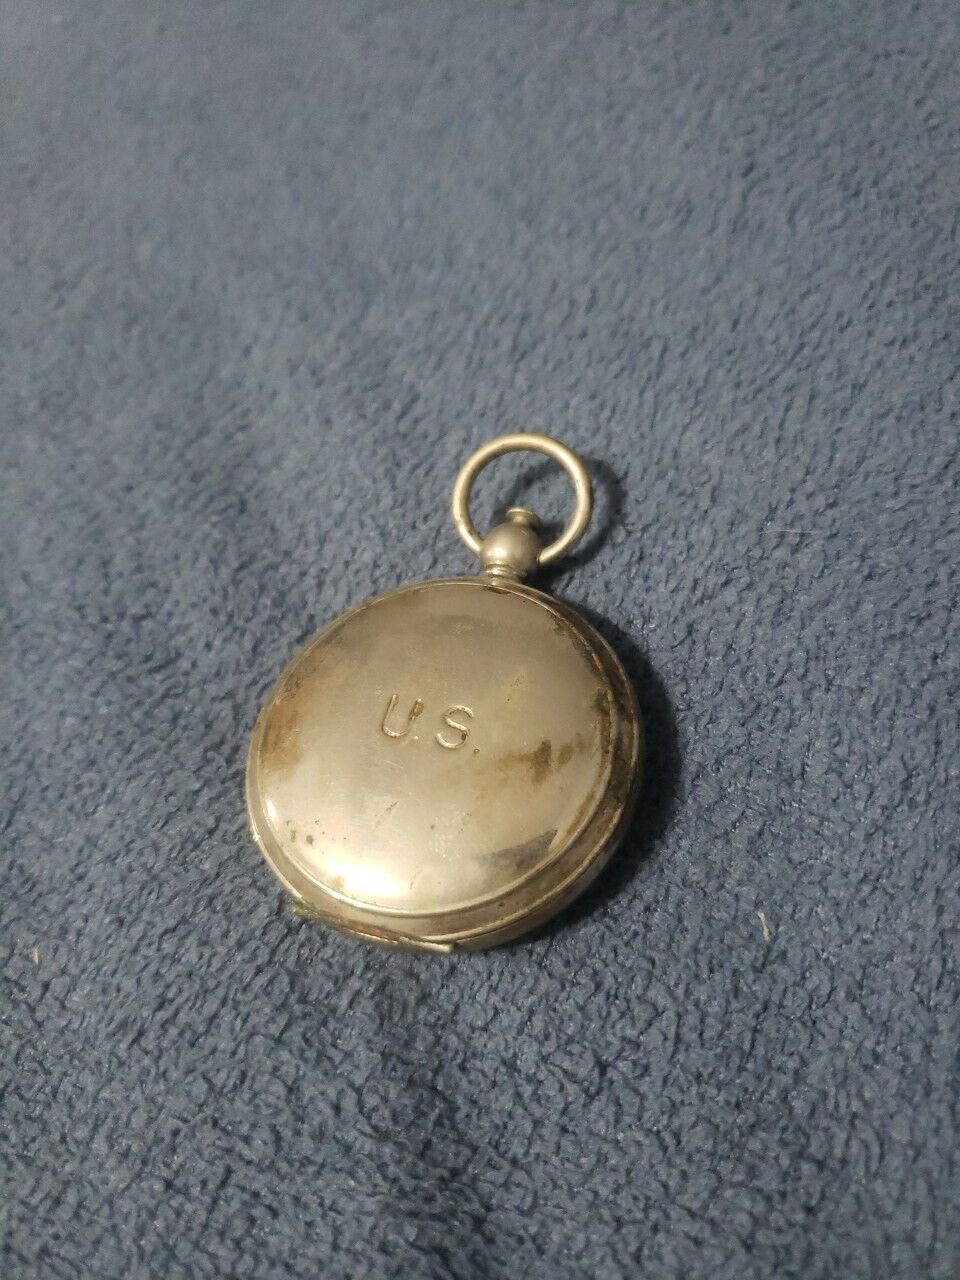 VTG WW2 WITTNAUER US Army Military Pocket Compass